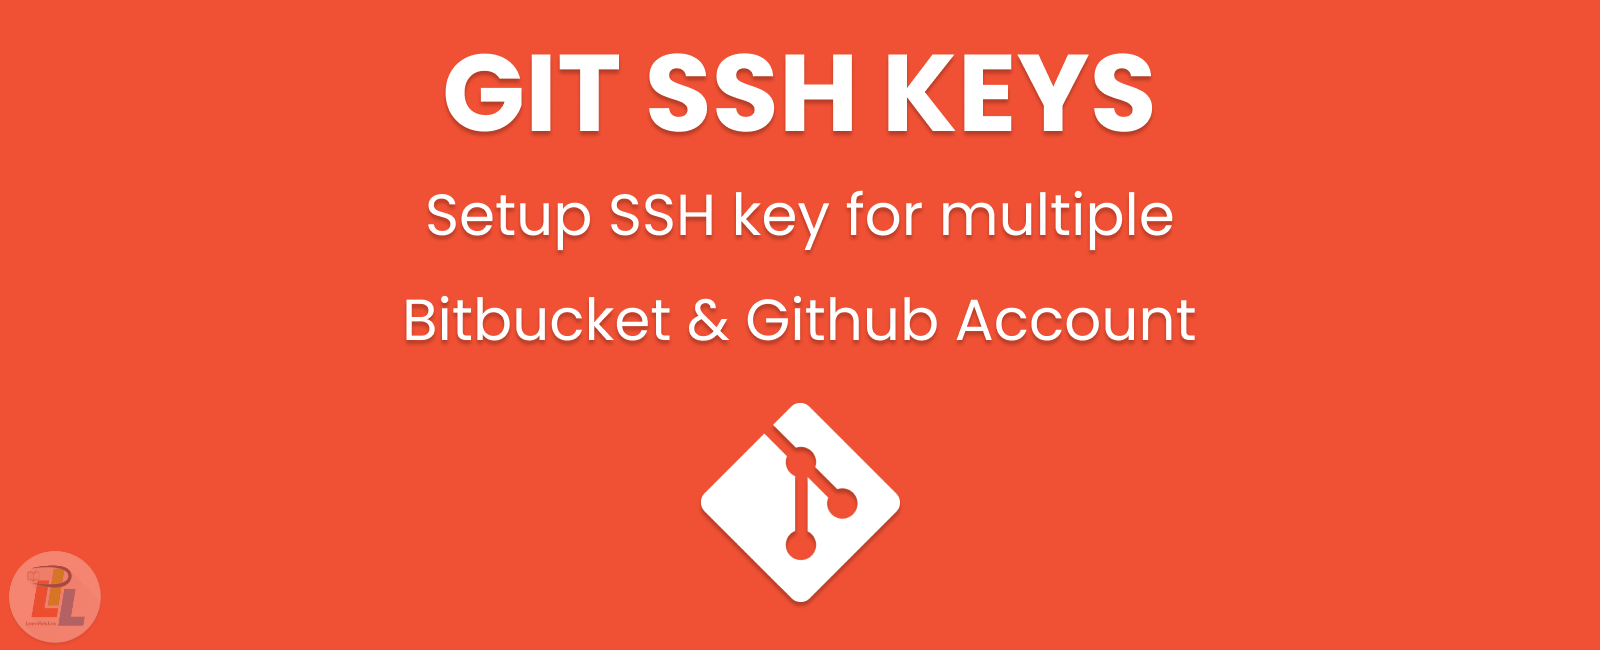 Setup SSH key for multiple Github/Bitbucket accounts